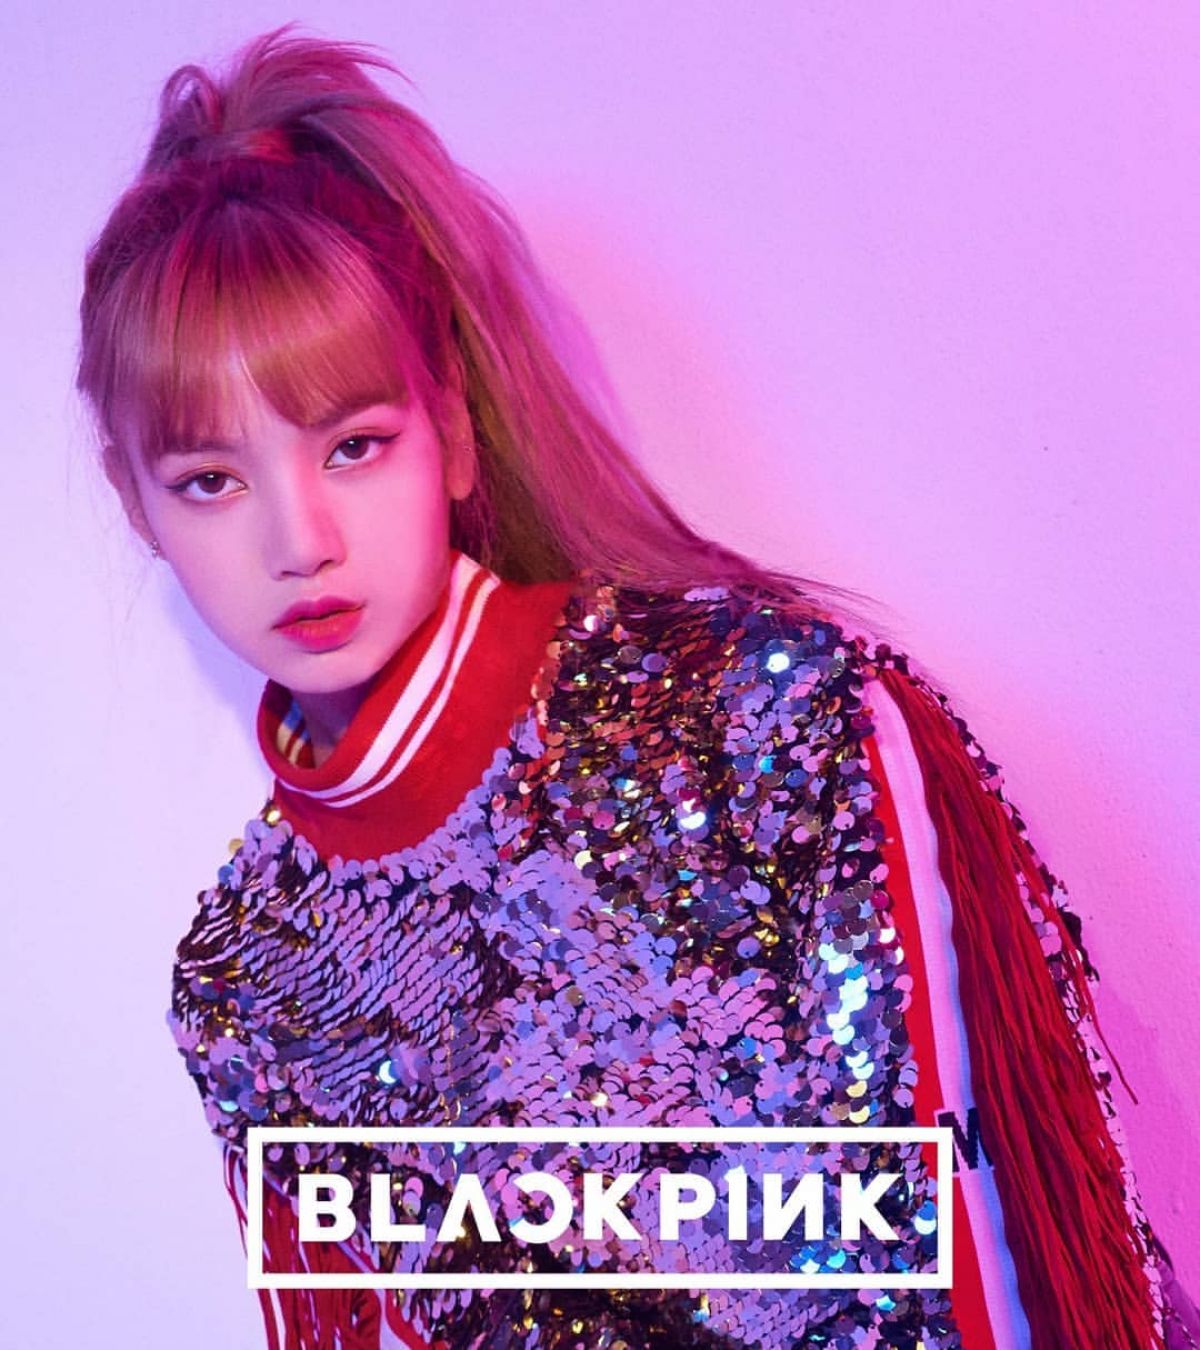 BLACKPINK Blackpink in Your Area Album Teaser 2018 HawtCelebs